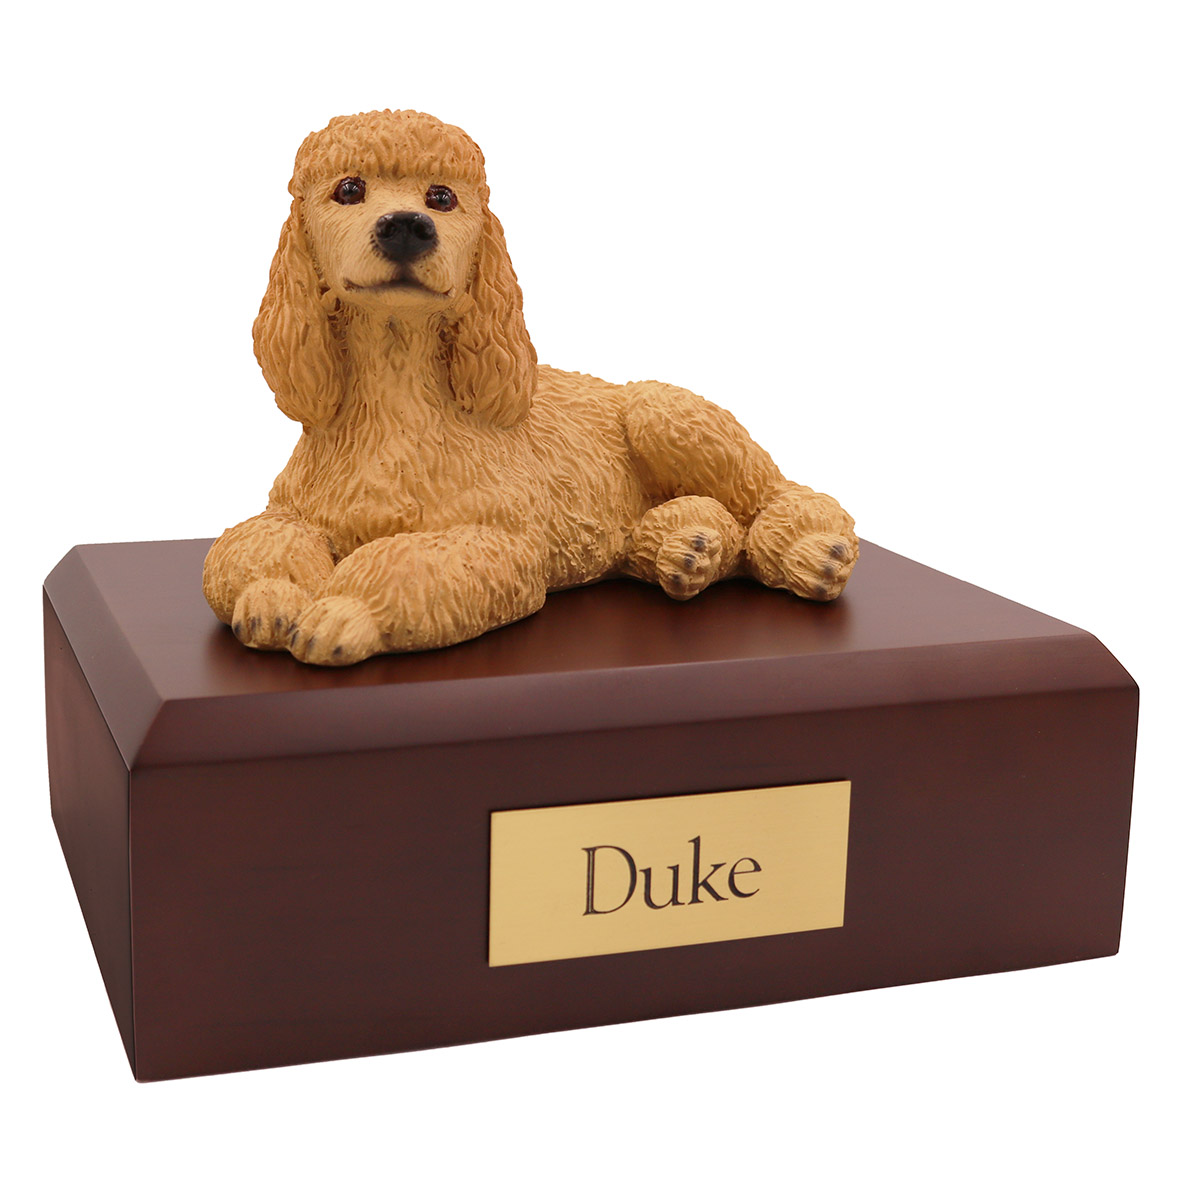 Dog, Poodle, Apricot - Figurine Urn